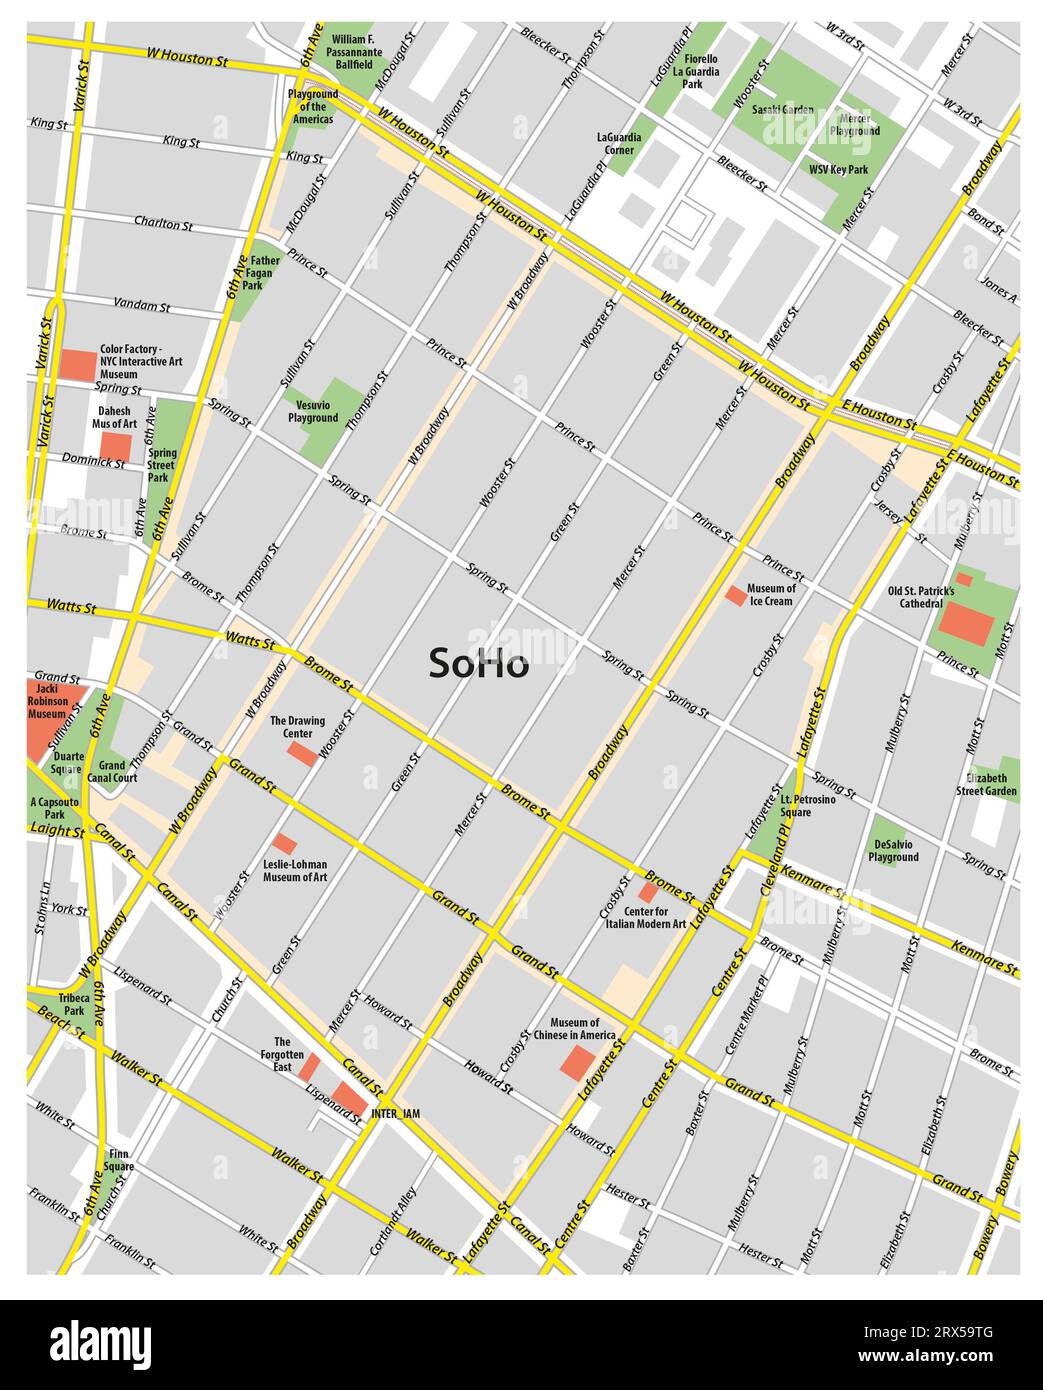 Street map of the New York neighborhood SoHo, Lower Manhattan, New York City Stock Photo